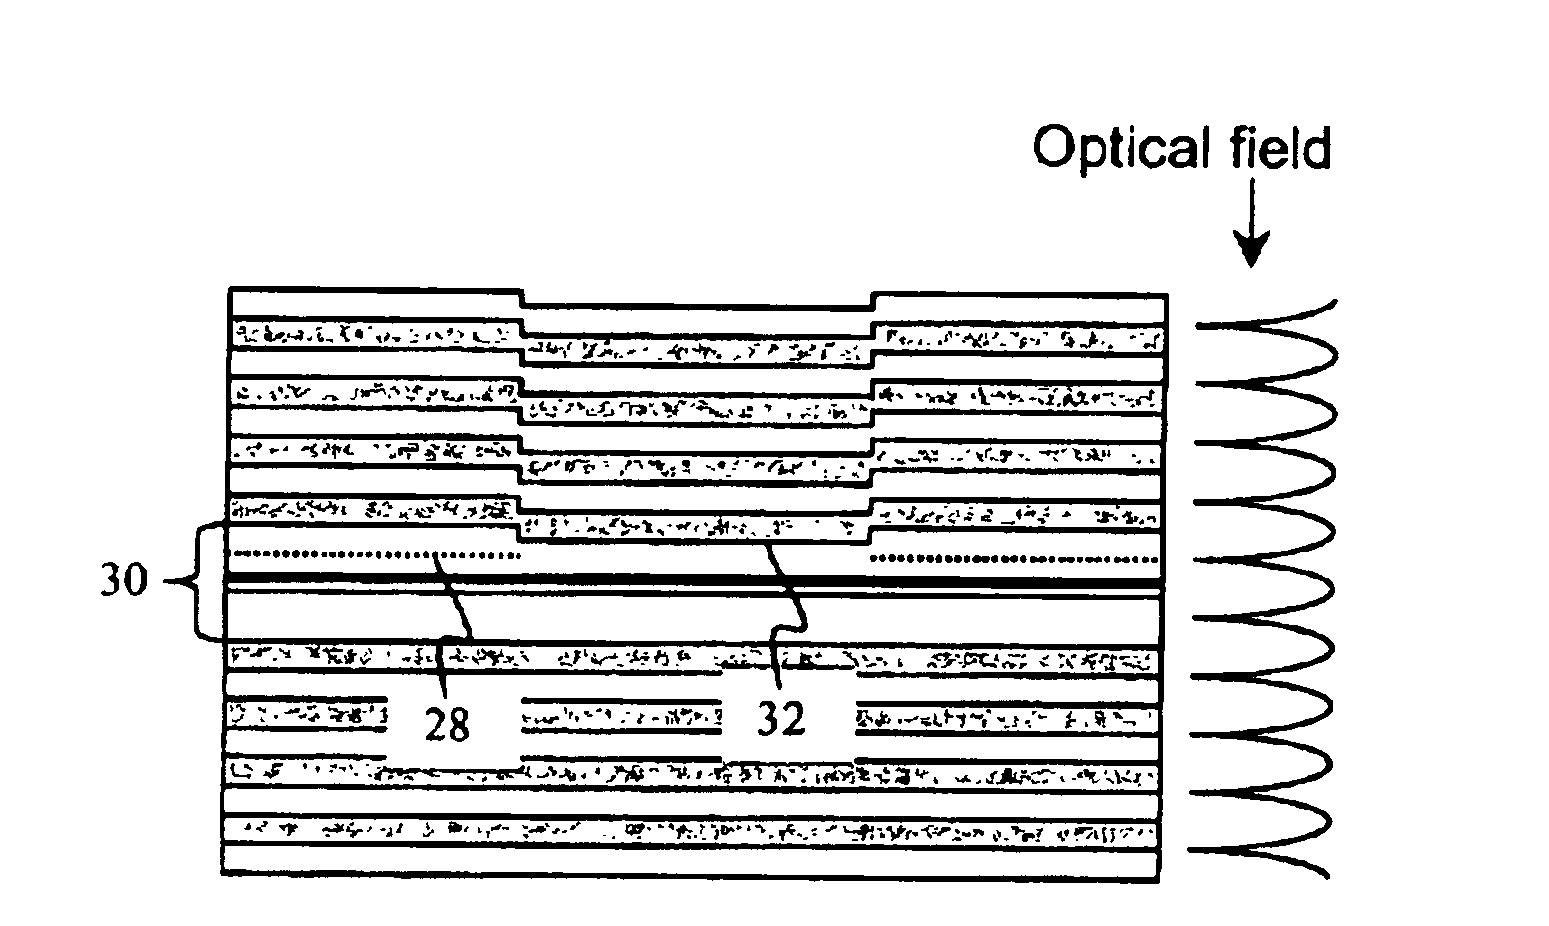 Antiguide single mode vertical cavity laser